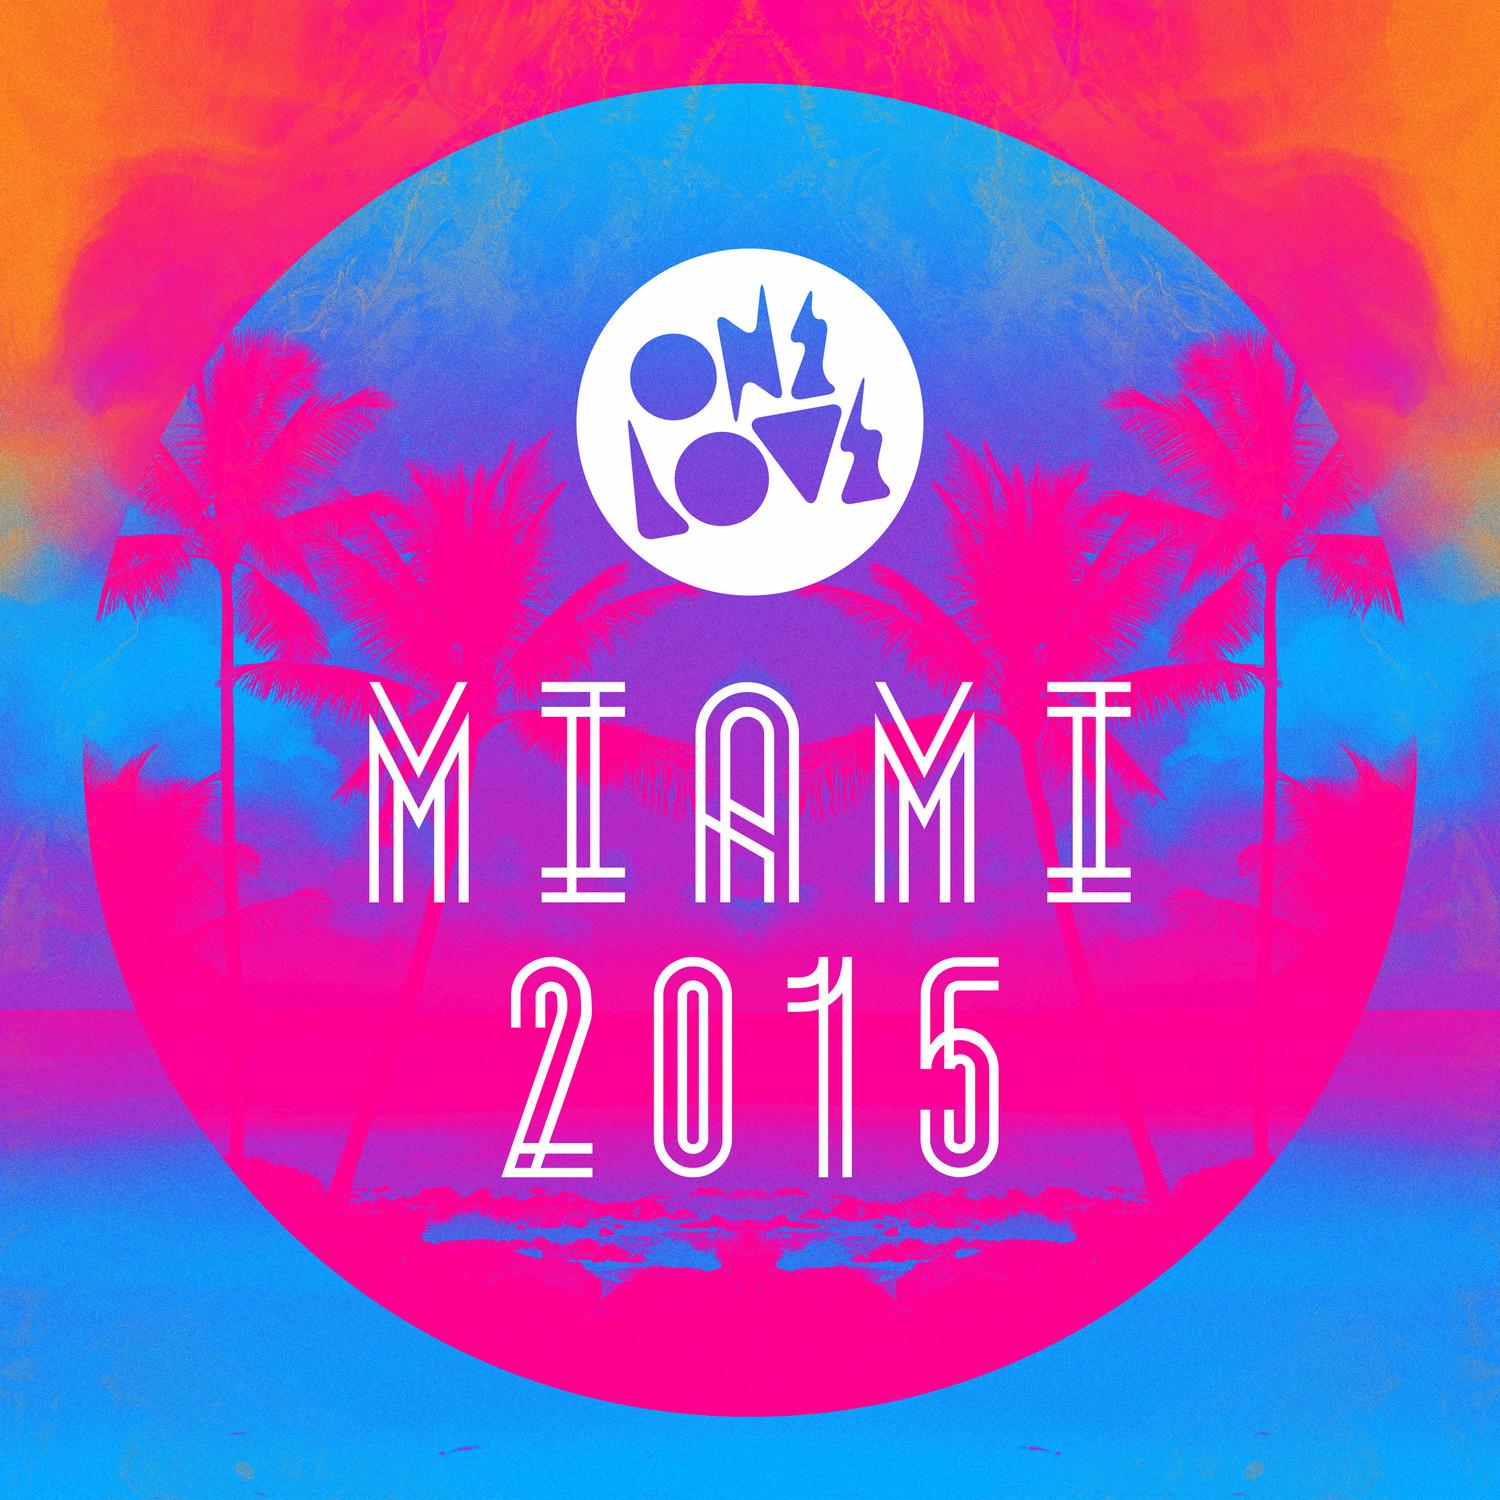 Onelove Miami 2015 (EDM & Future House Continuous DJ Mix)